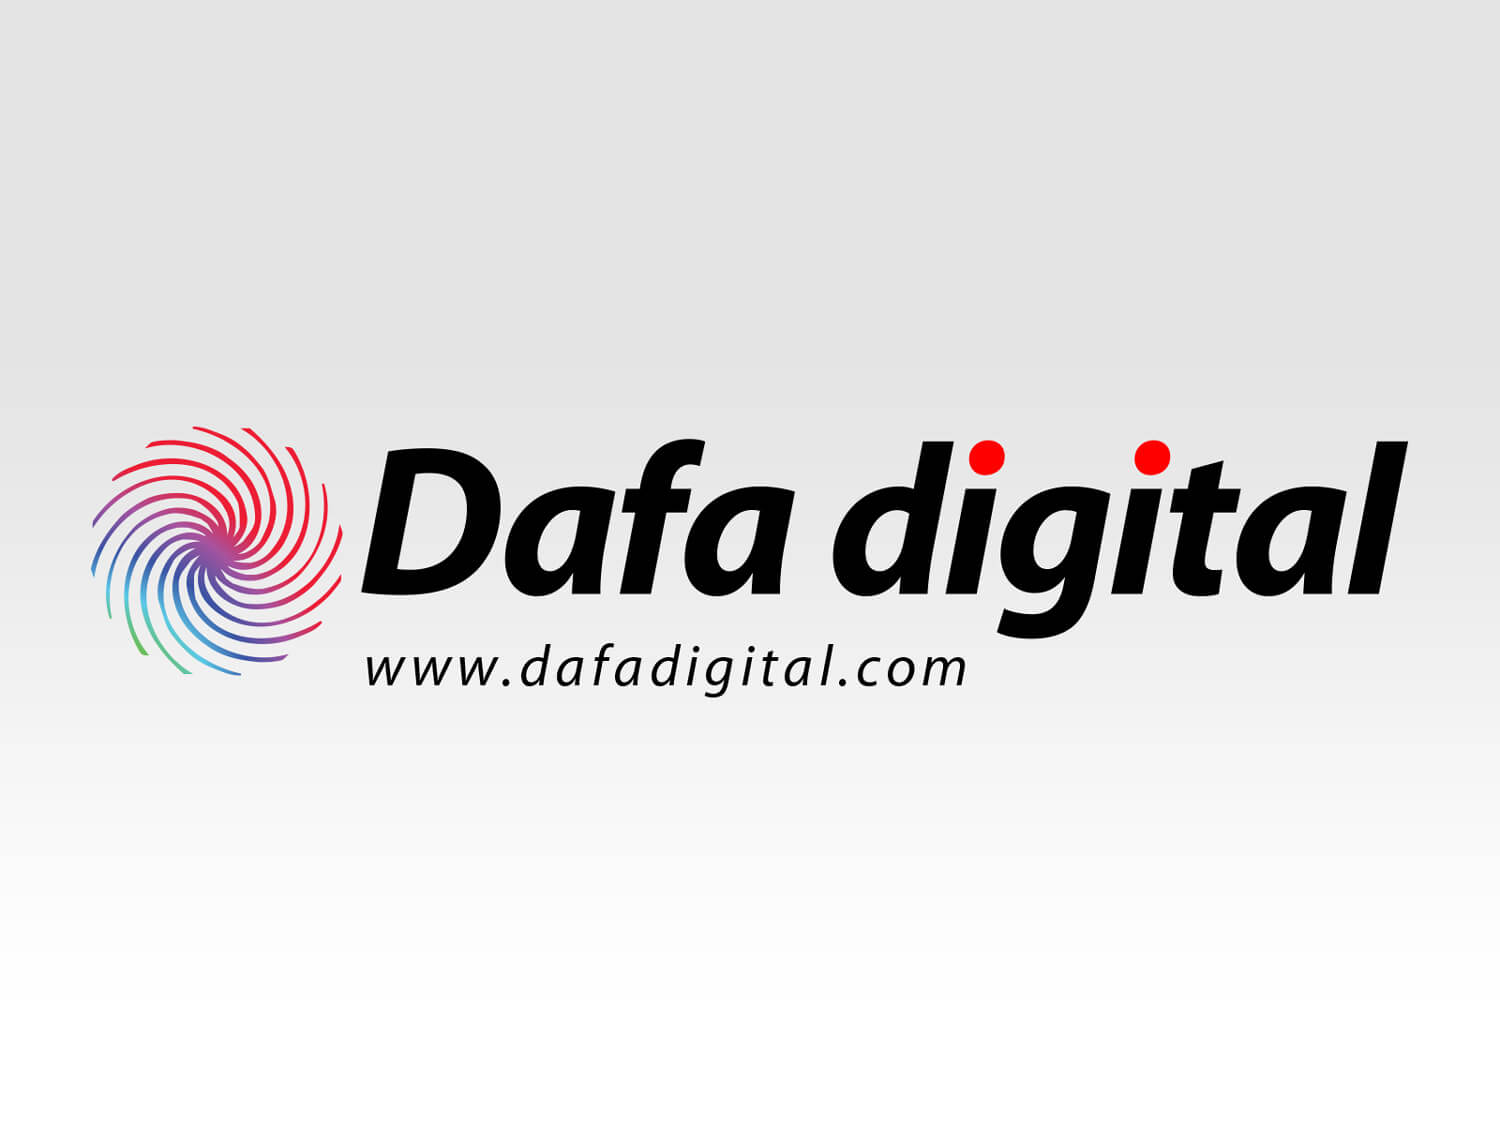 Dafa digital